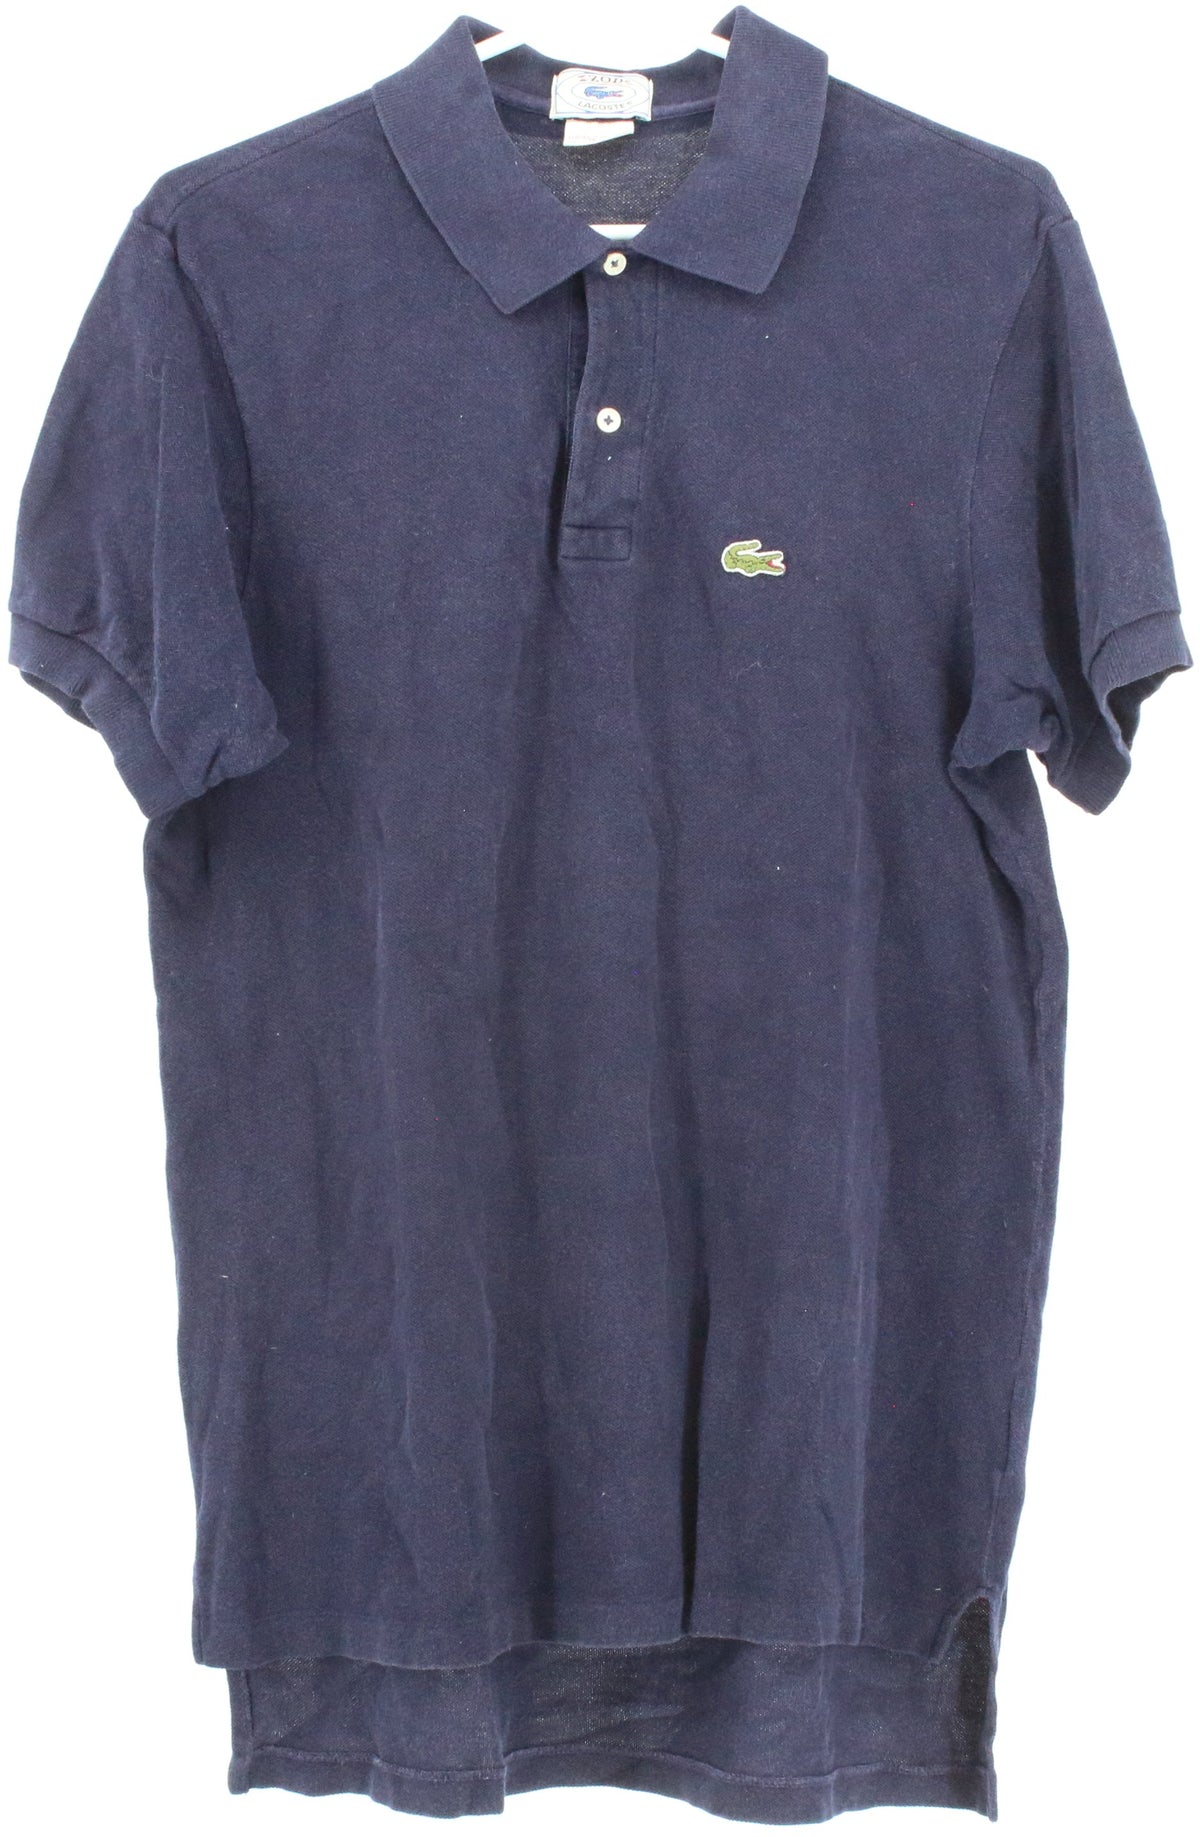 Izod Lacoste Navy Blue Polo Shirt